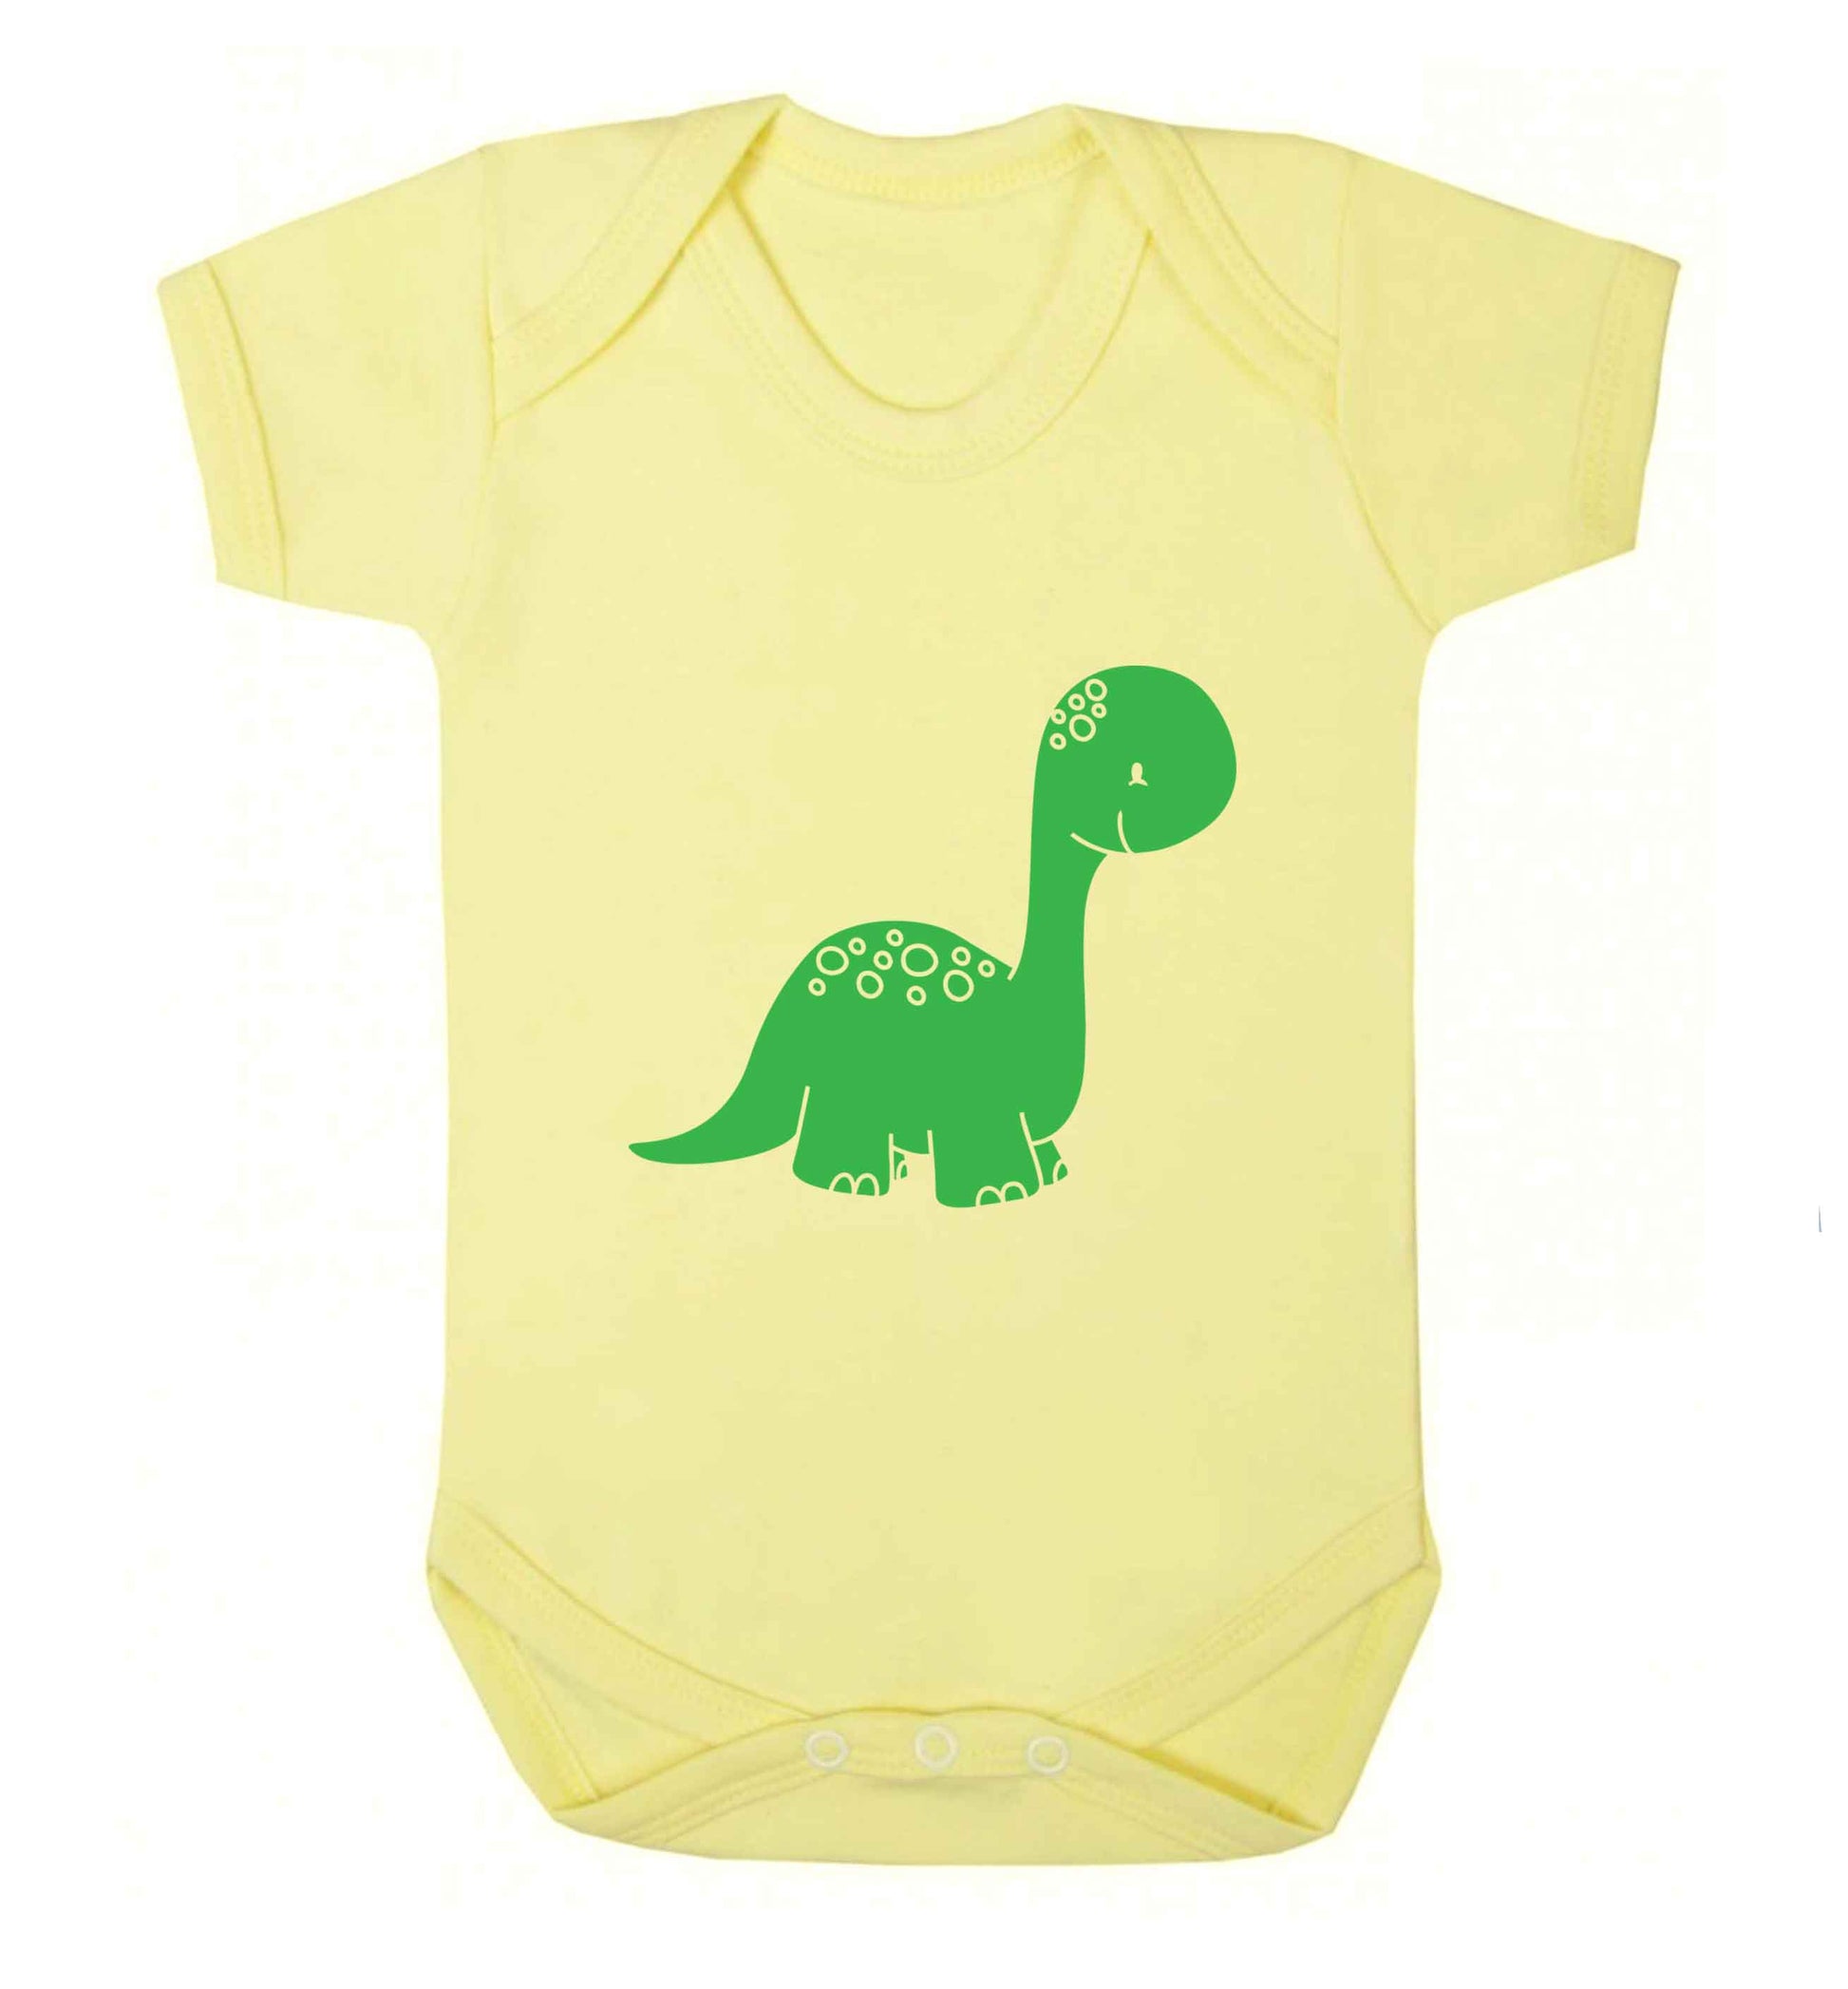 Dinosaur illustration baby vest pale yellow 18-24 months